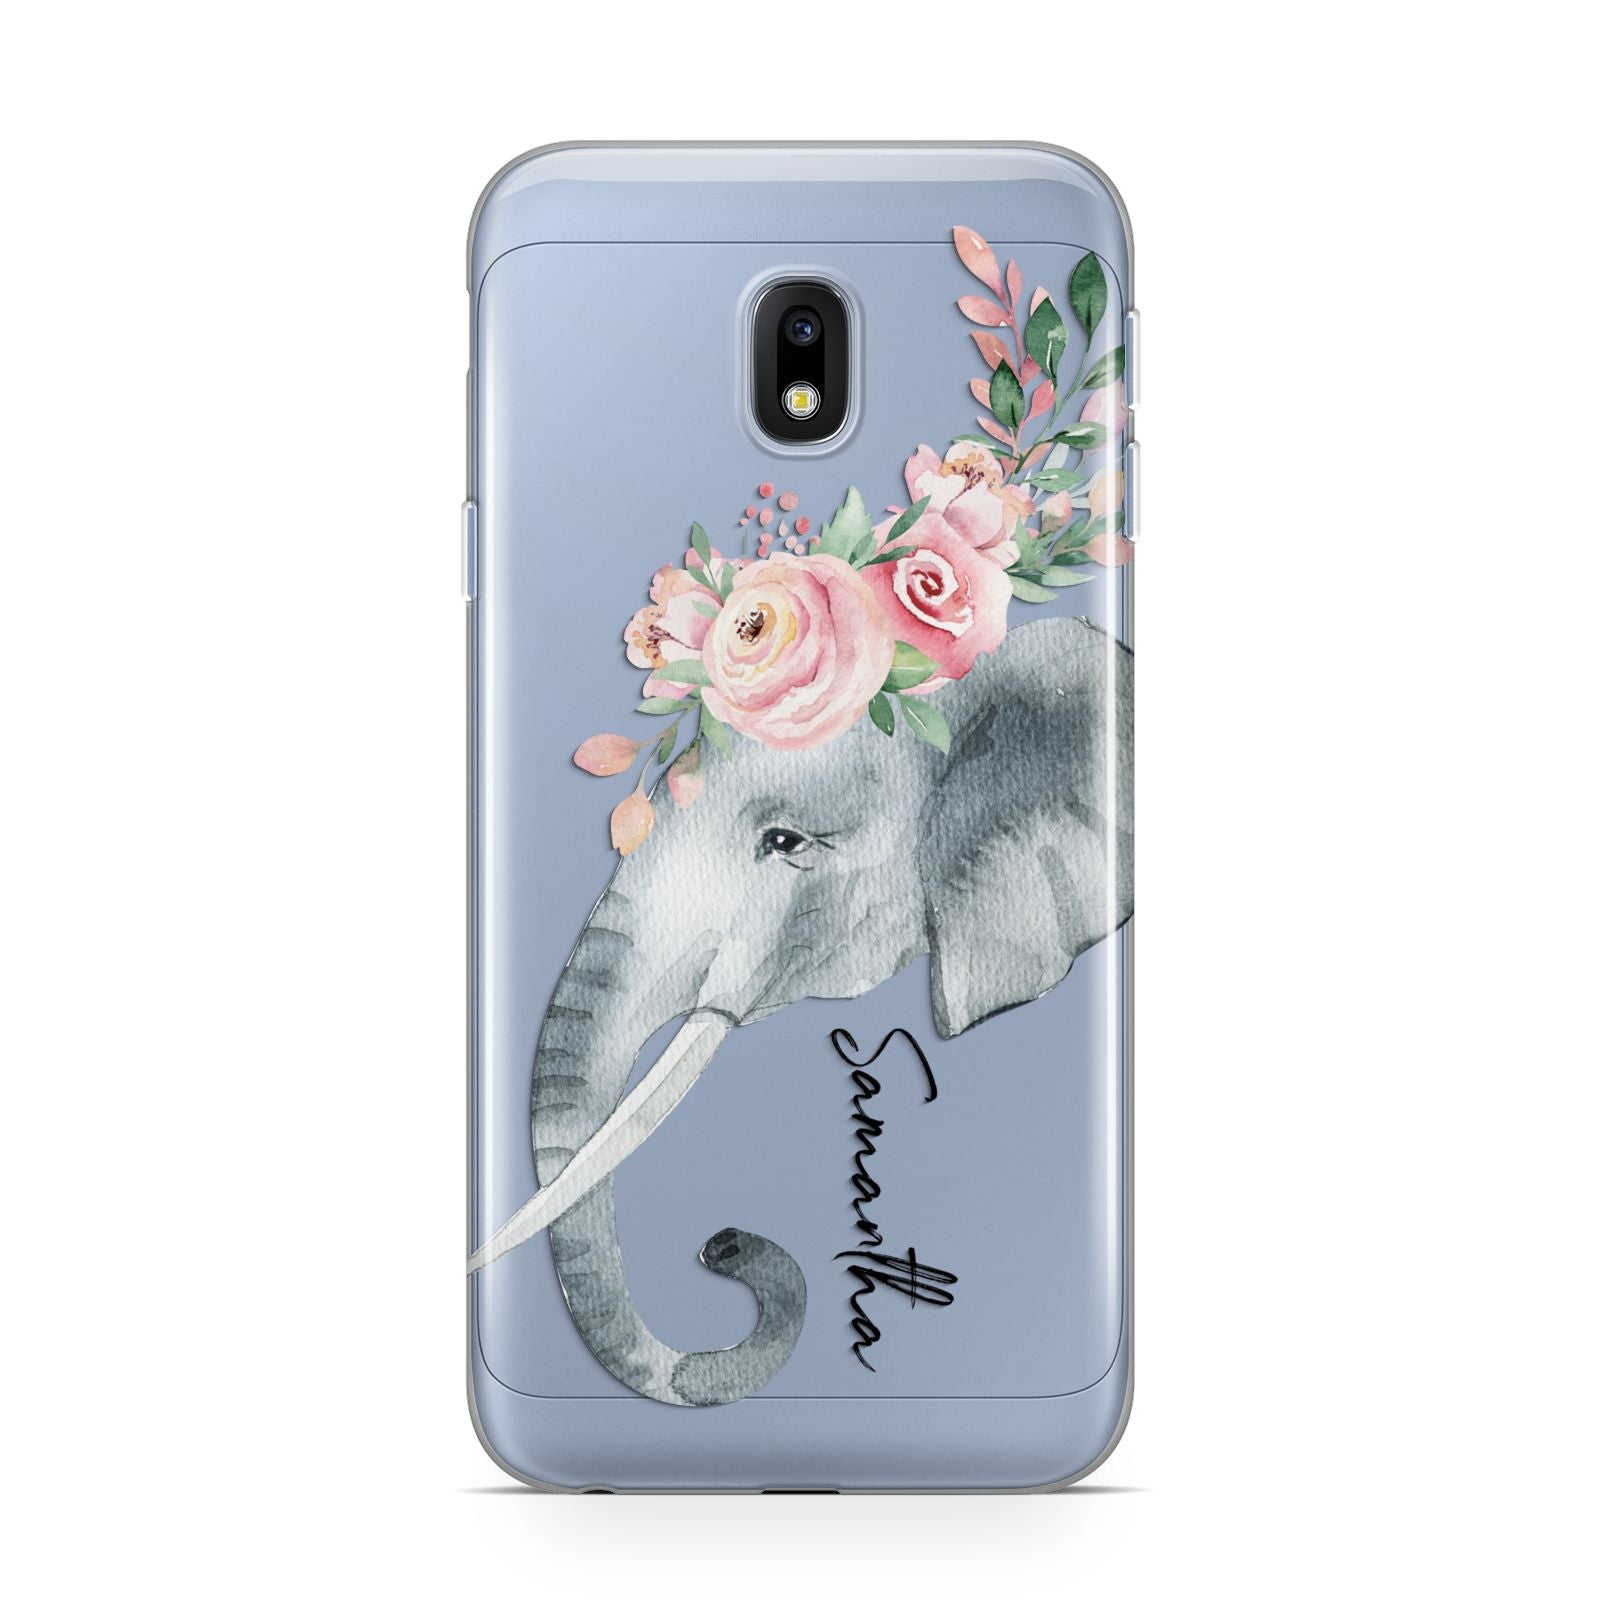 Personalised Elephant Samsung Galaxy J3 2017 Case